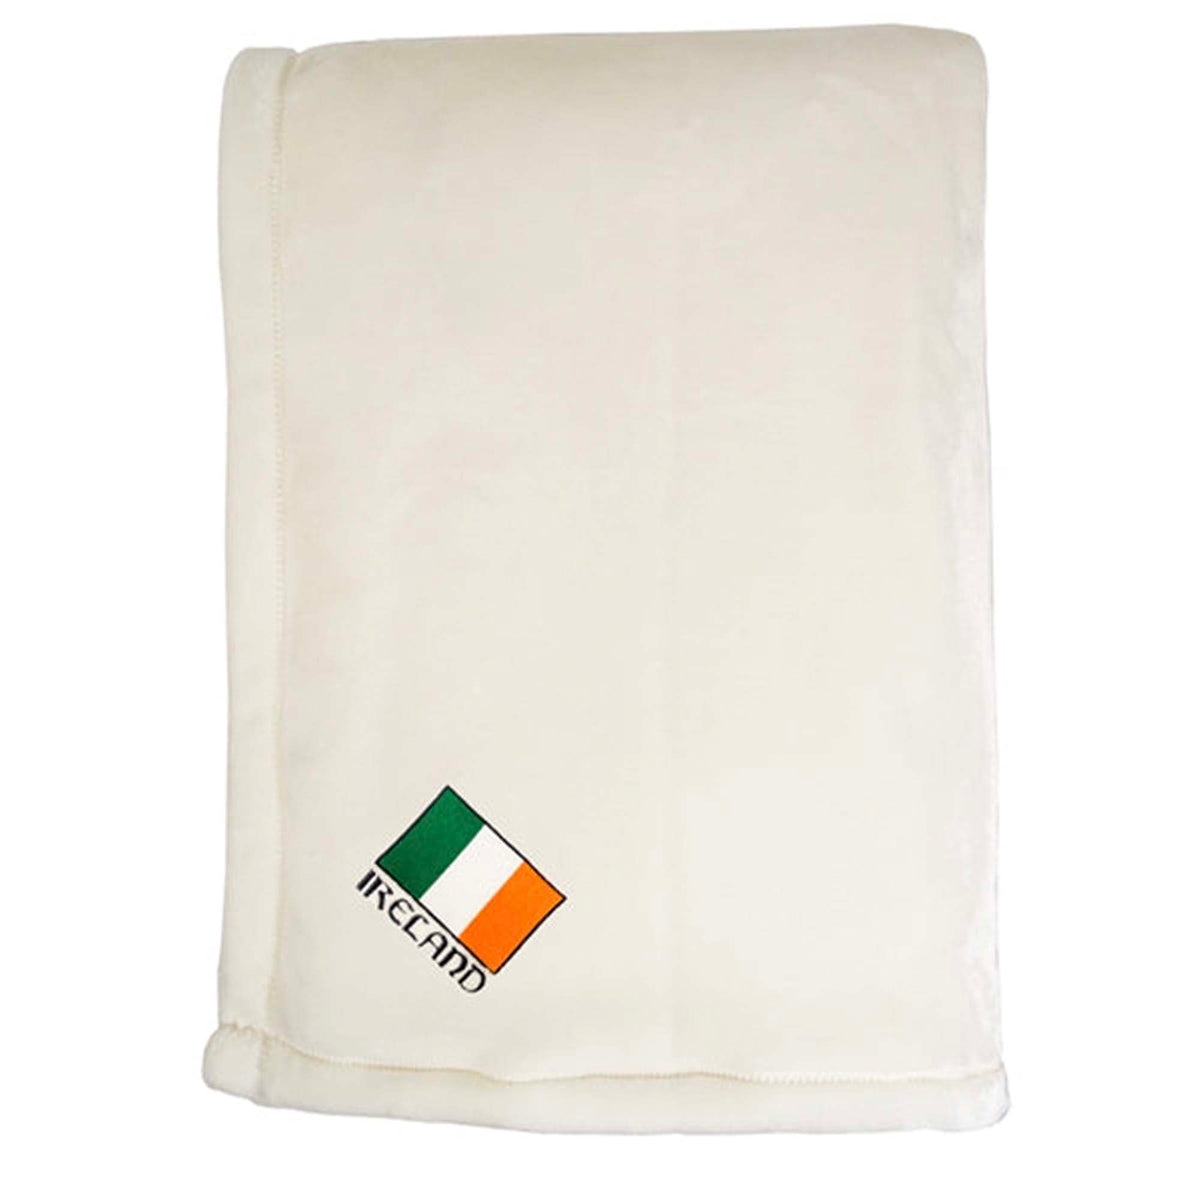 Irish Flag embroidered blanket embroidered Cotton Ball fleece blanket - Luster Loft Fleece Blanket - American Blanket Company